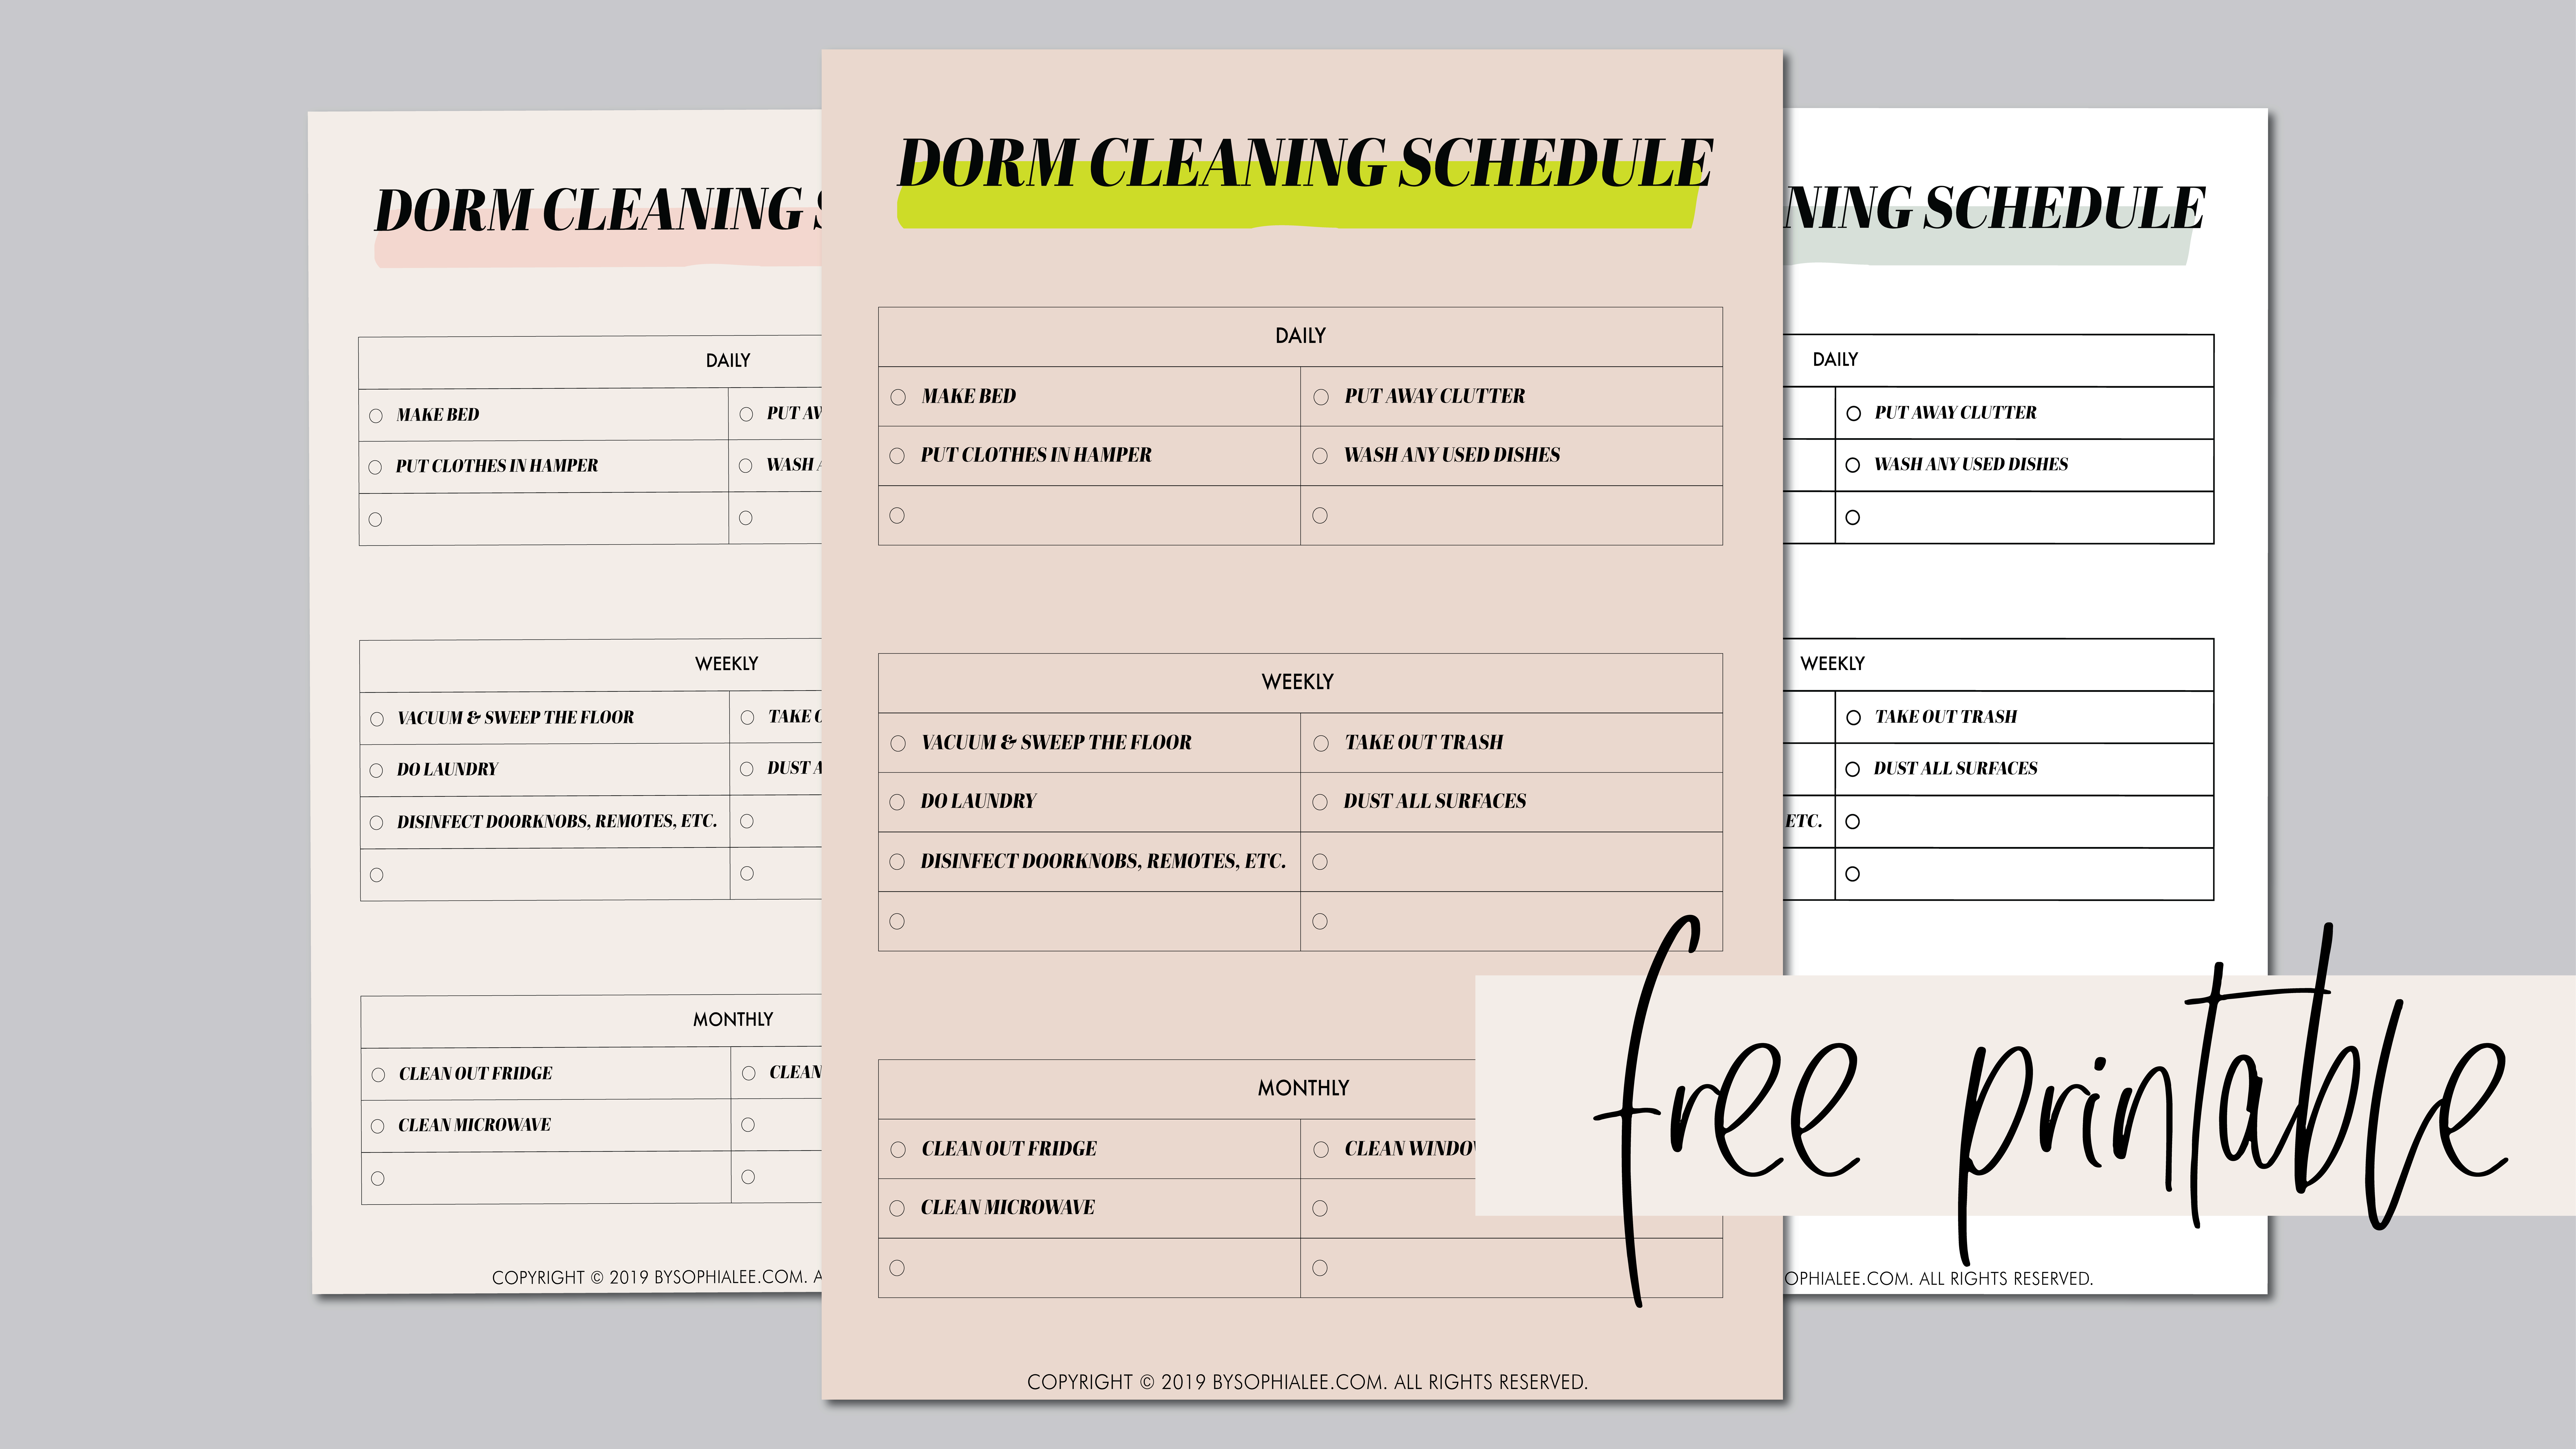 dorm cleaning schedule